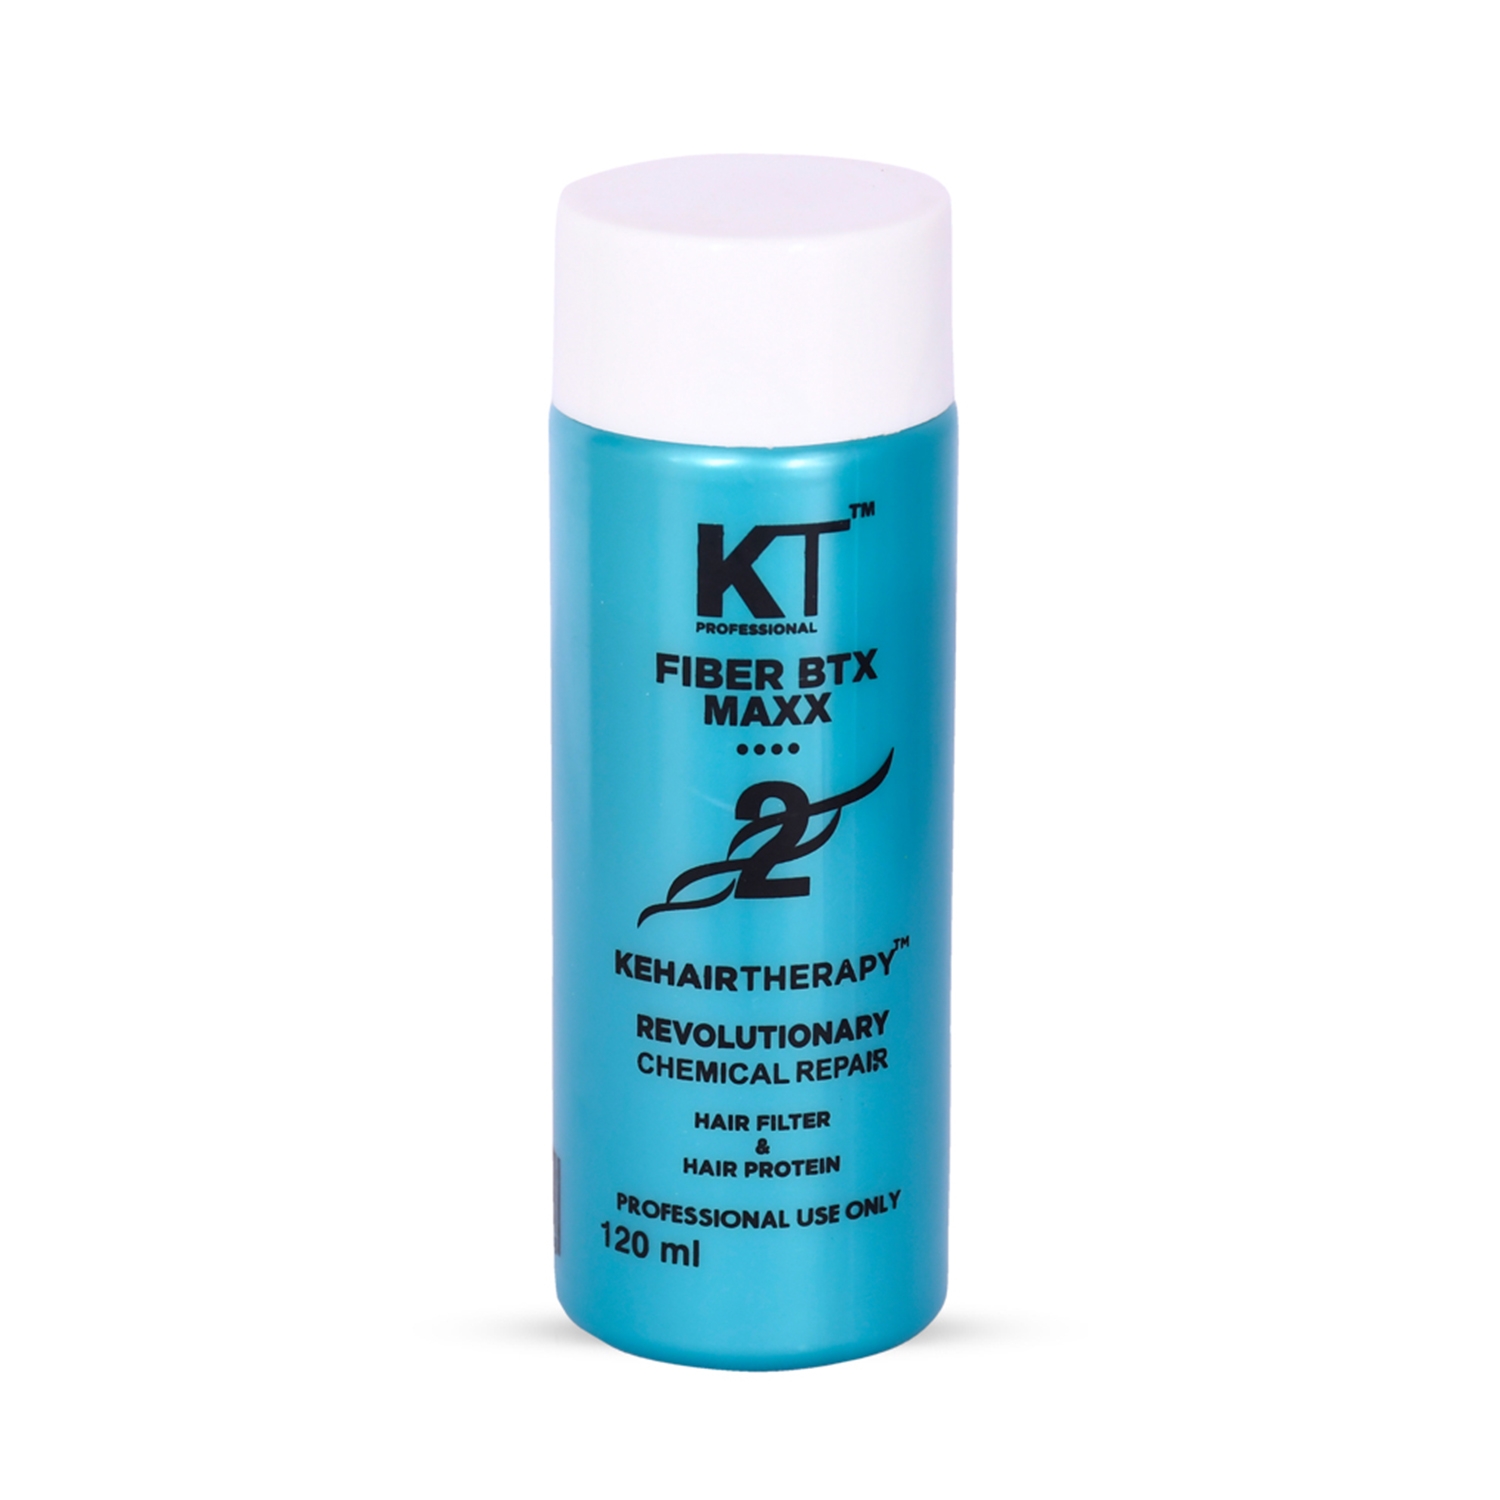 KT Professional Fiber Botox Maxx Hair Treatment (120ml)